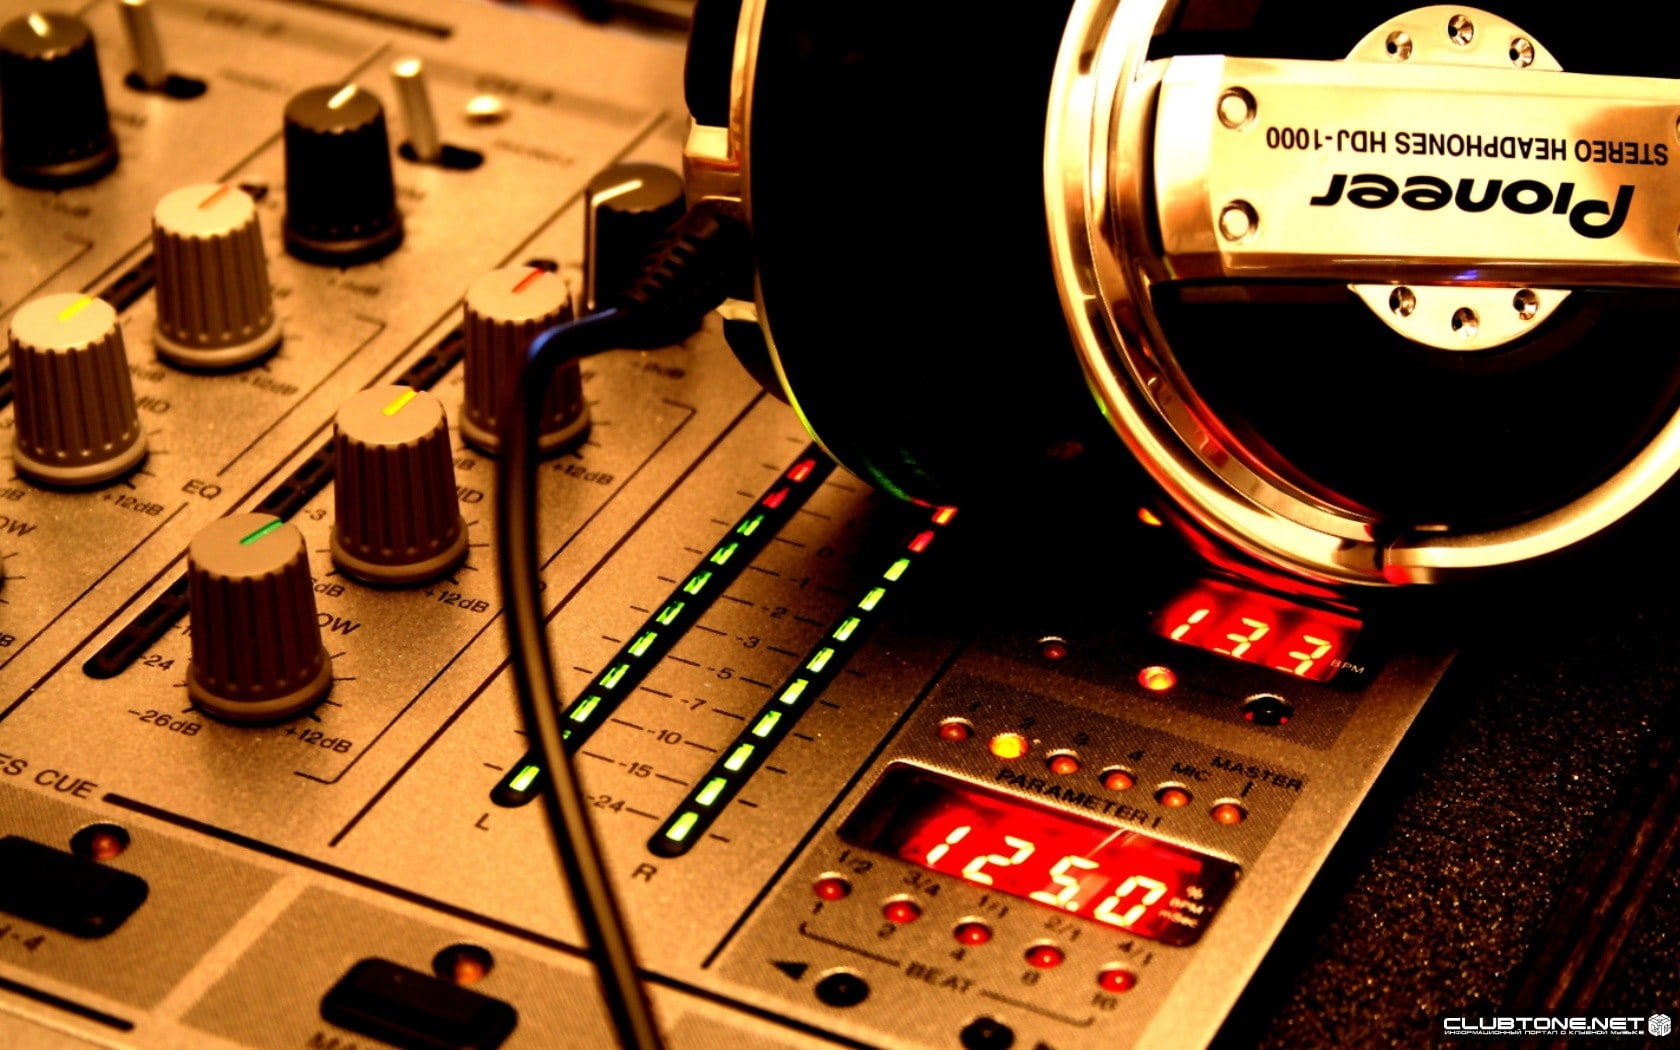 technology, pioneer (logo), headphones, DJ, audio, mixing consoles